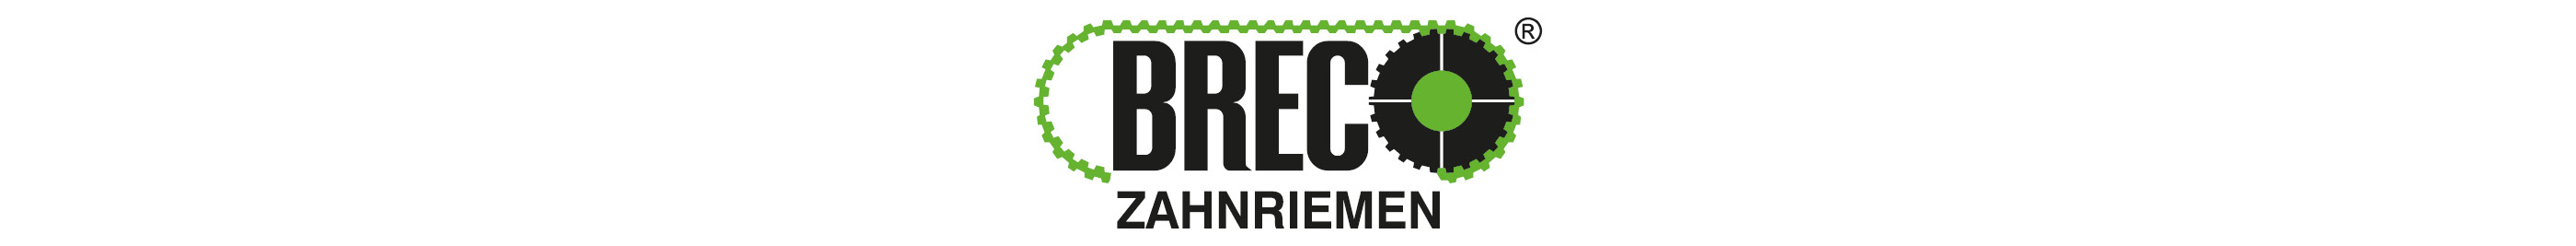 BRECO-Zahnriemen_eShop.jpg